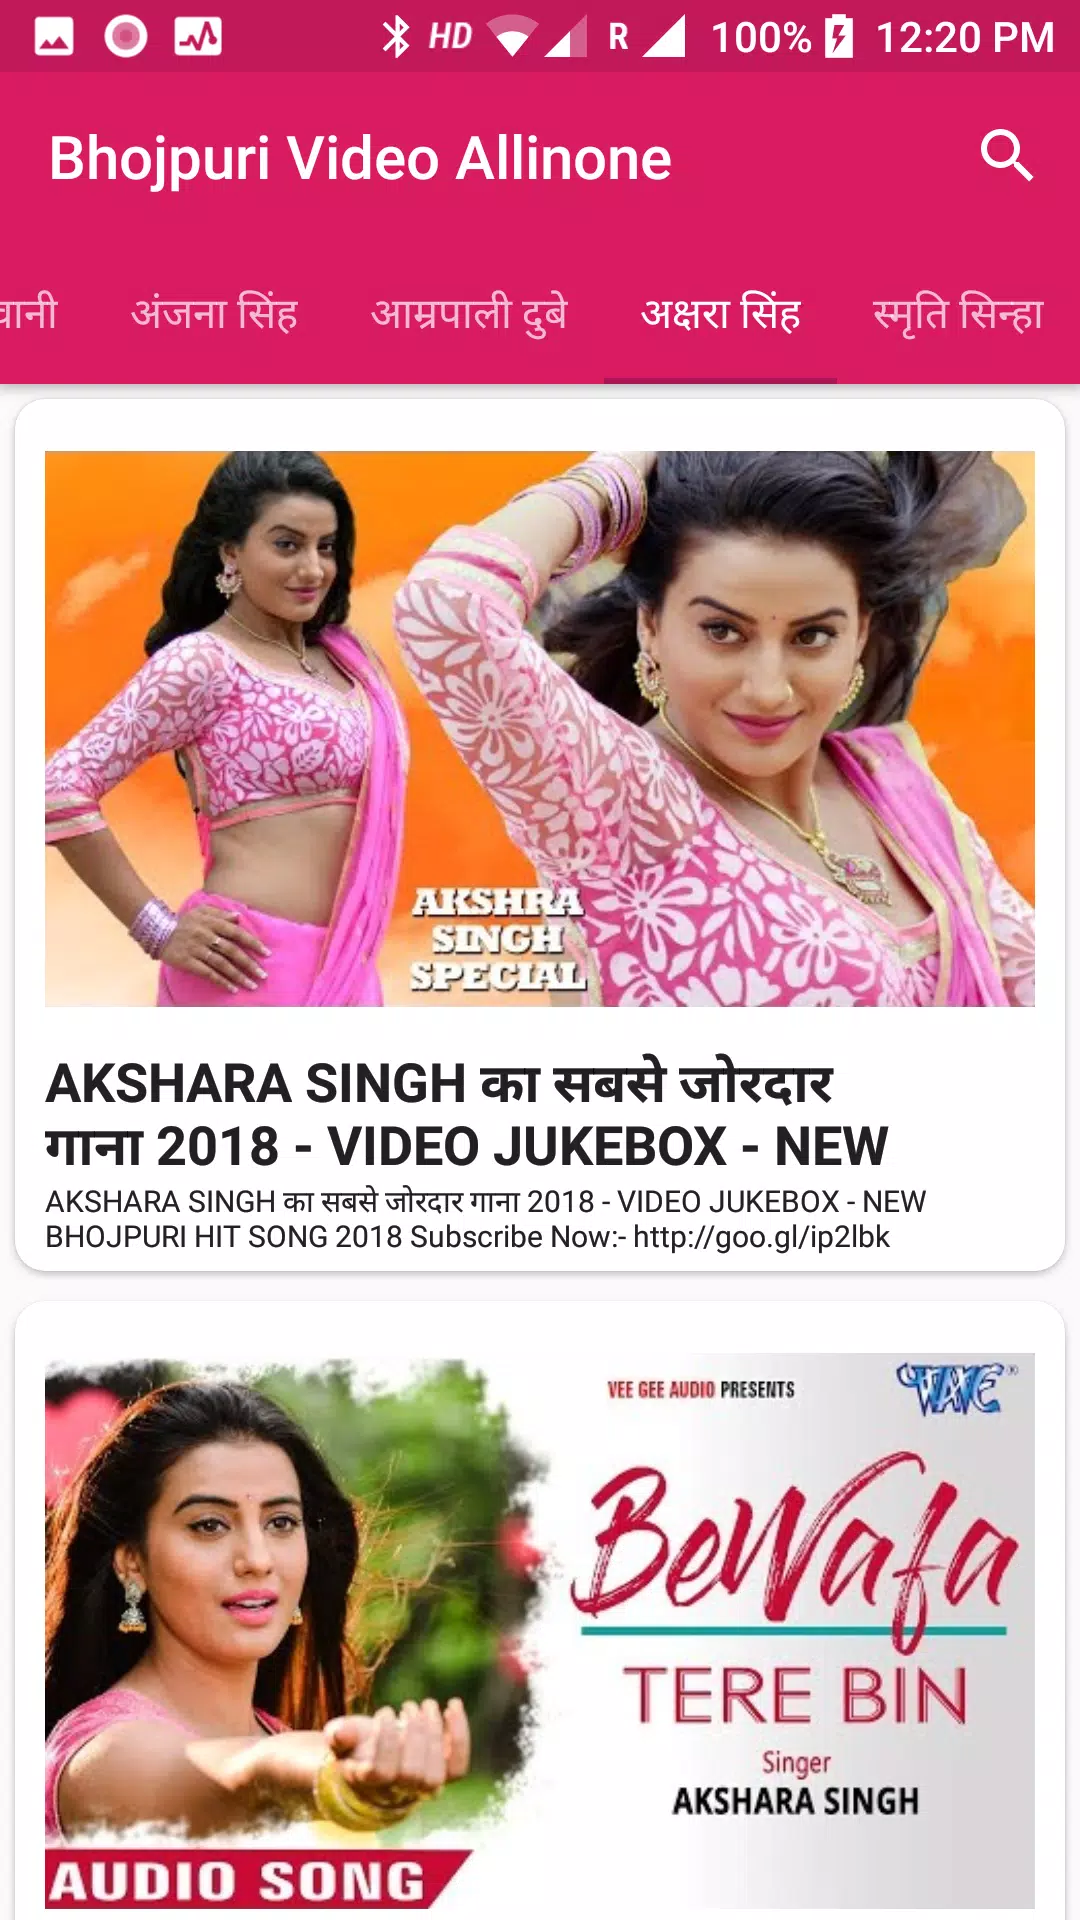 Monalisa Ki Xxx Video Hd - Bhojpuri Video Allinone APK for Android Download